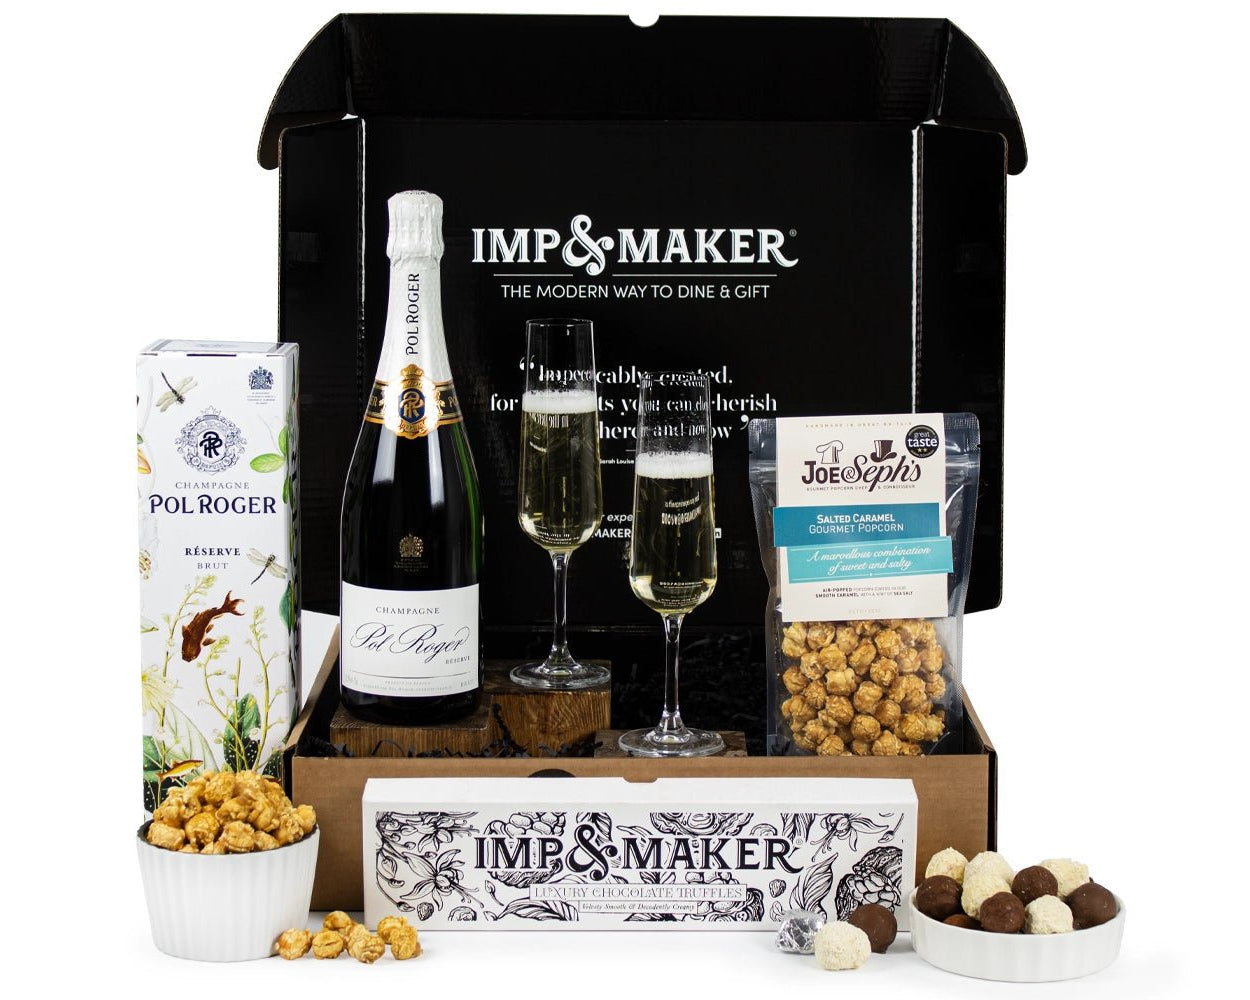 Pol Roger Champagne & Treats Hamper - IMP & MAKER